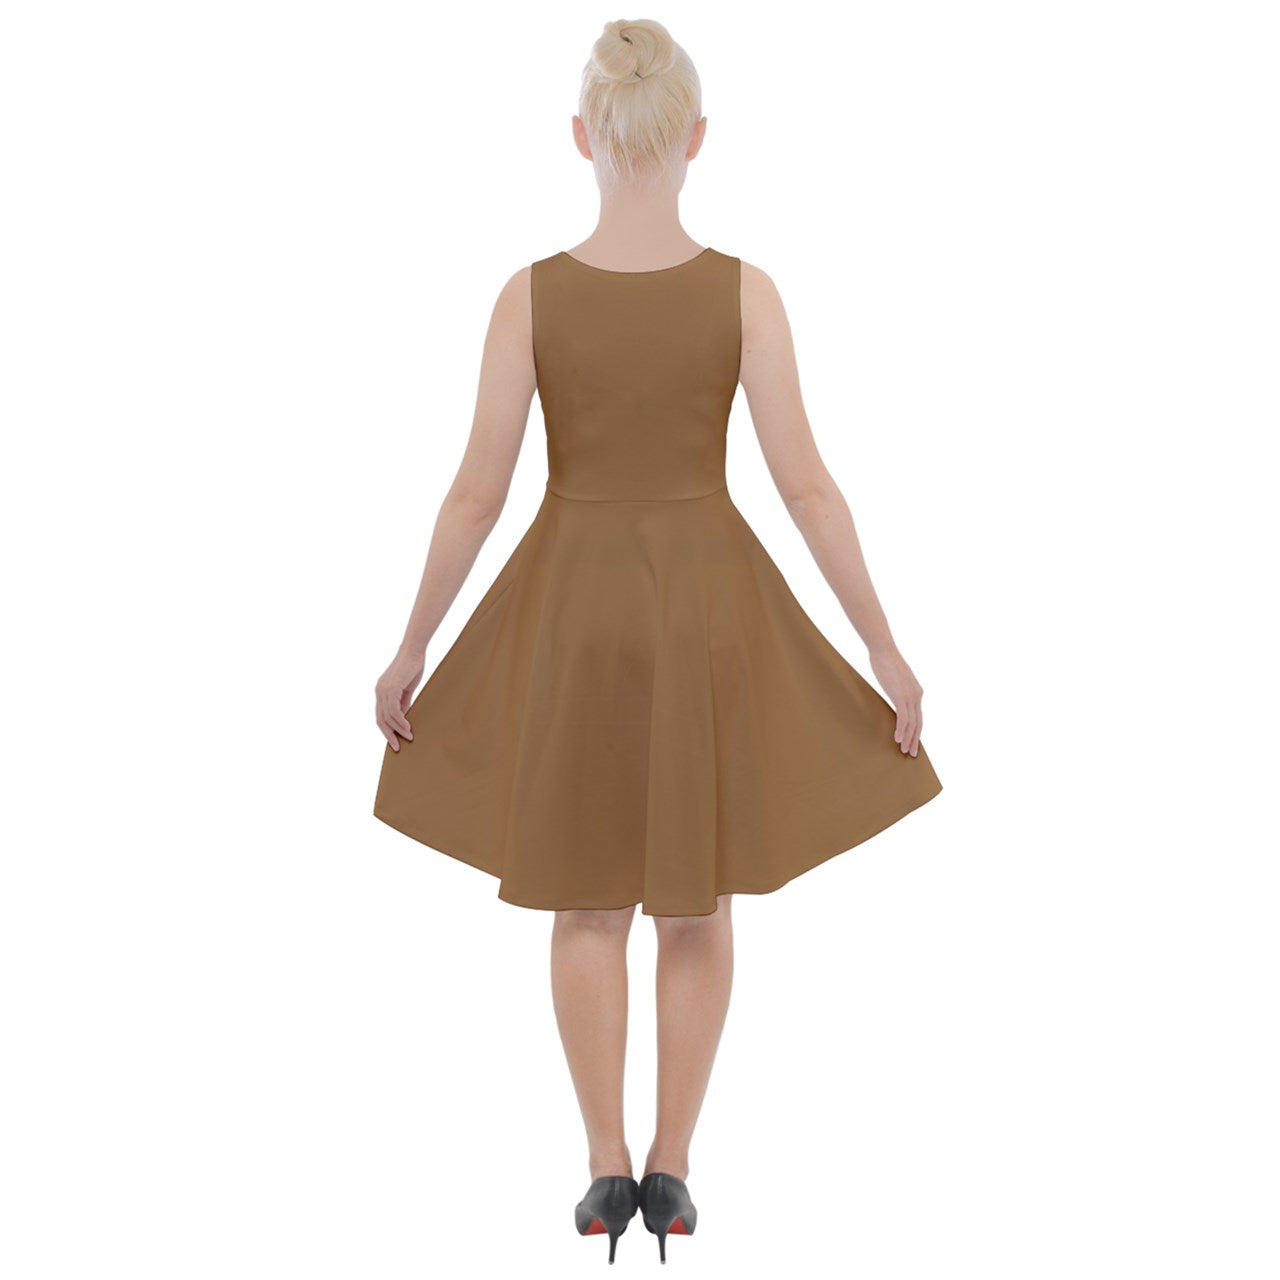 Pattern 199 Knee-Length Skater Dress with Pockets